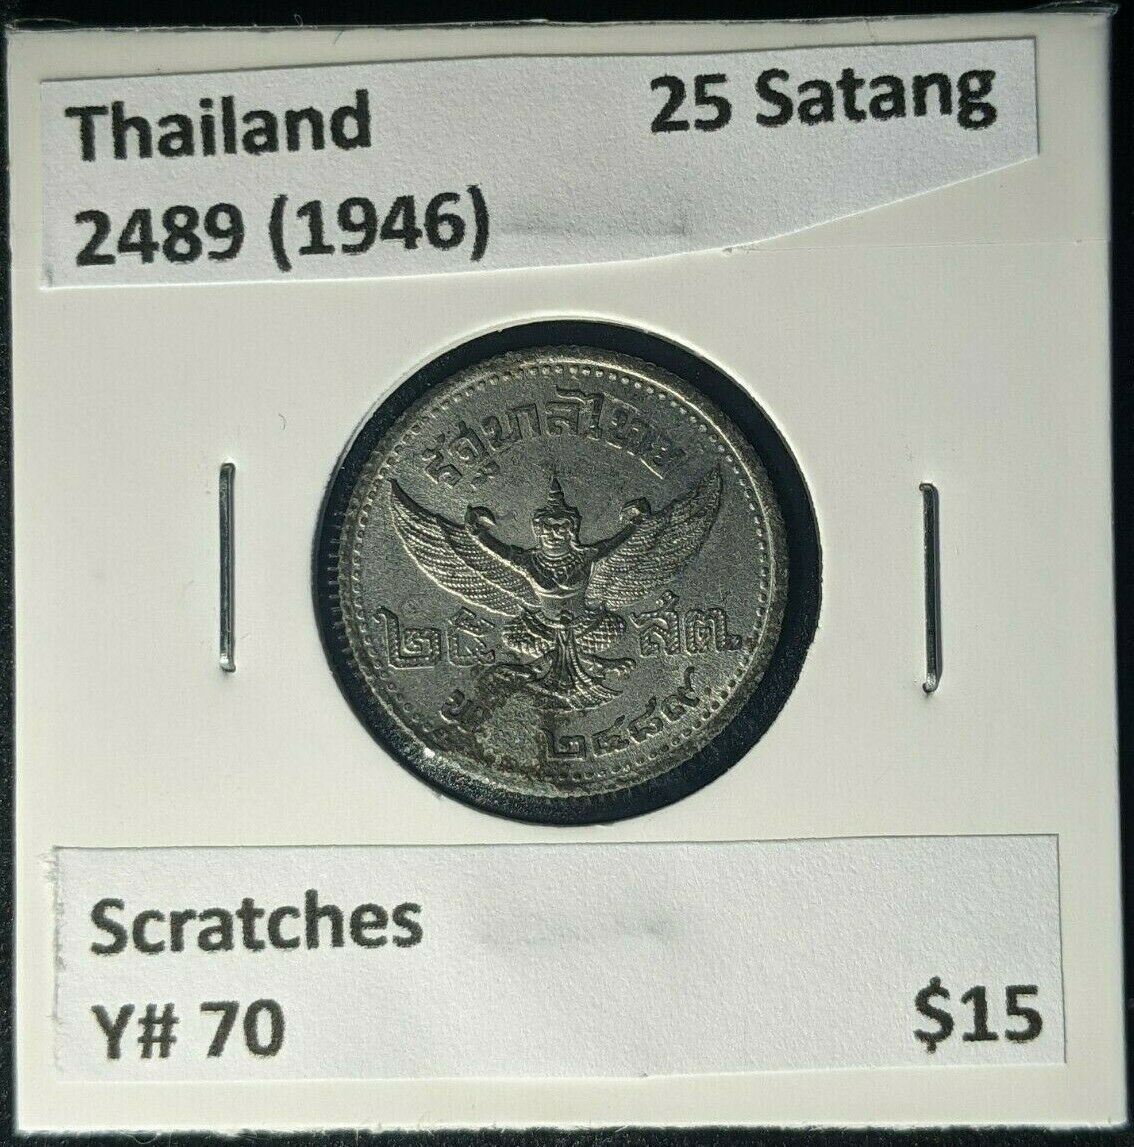 Thailand 2489 (1946) 25 Satang Y# 70 Scratches #1837    10C